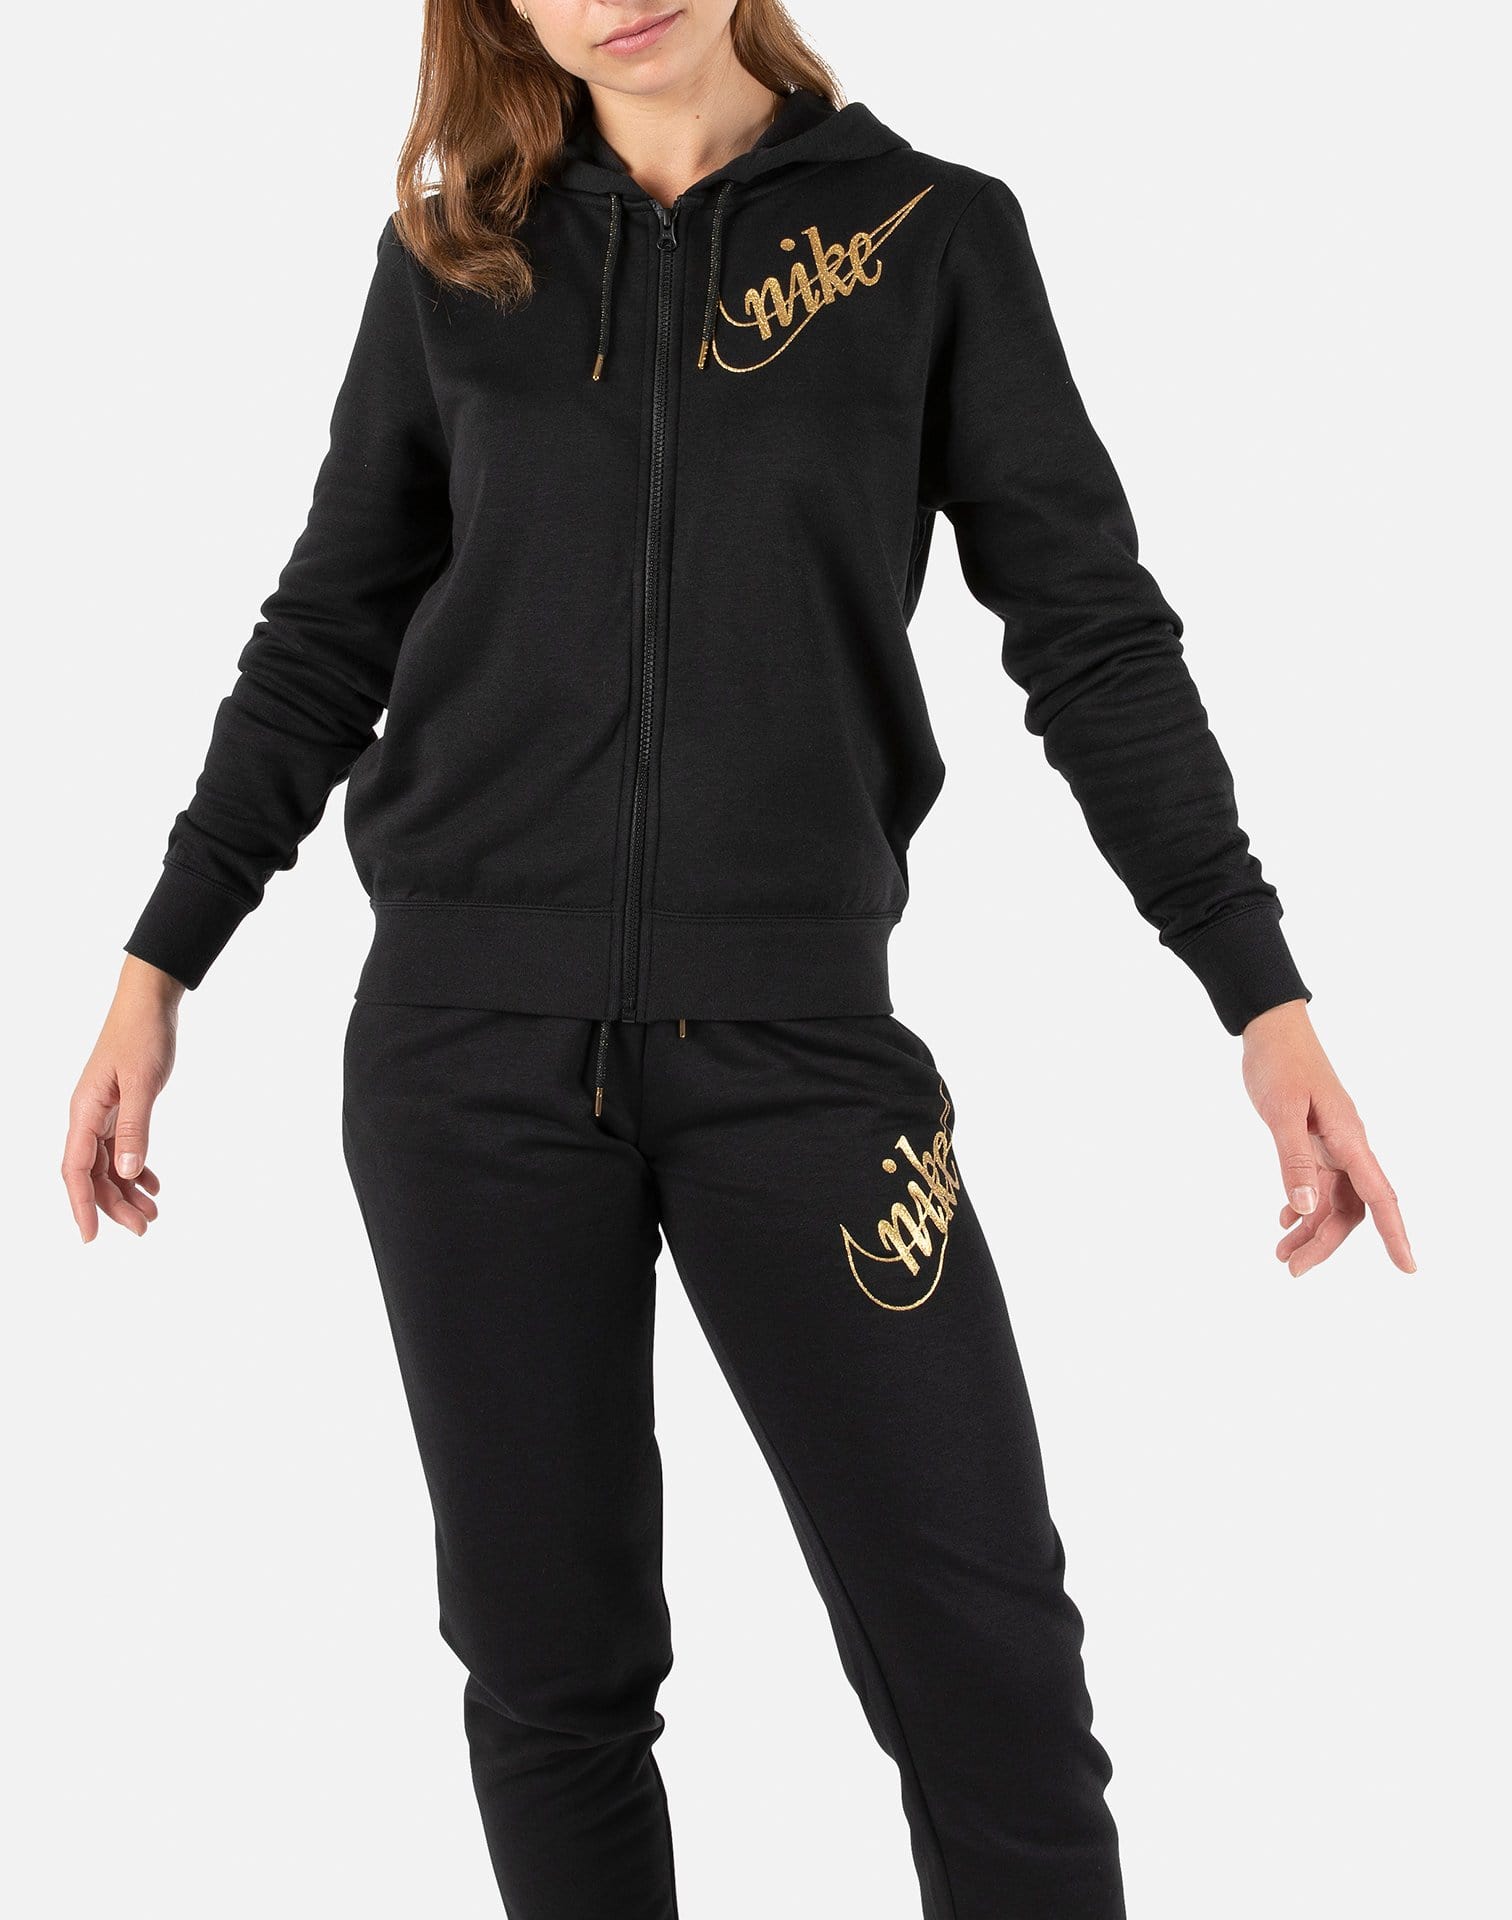 women's nike black and gold hoodie